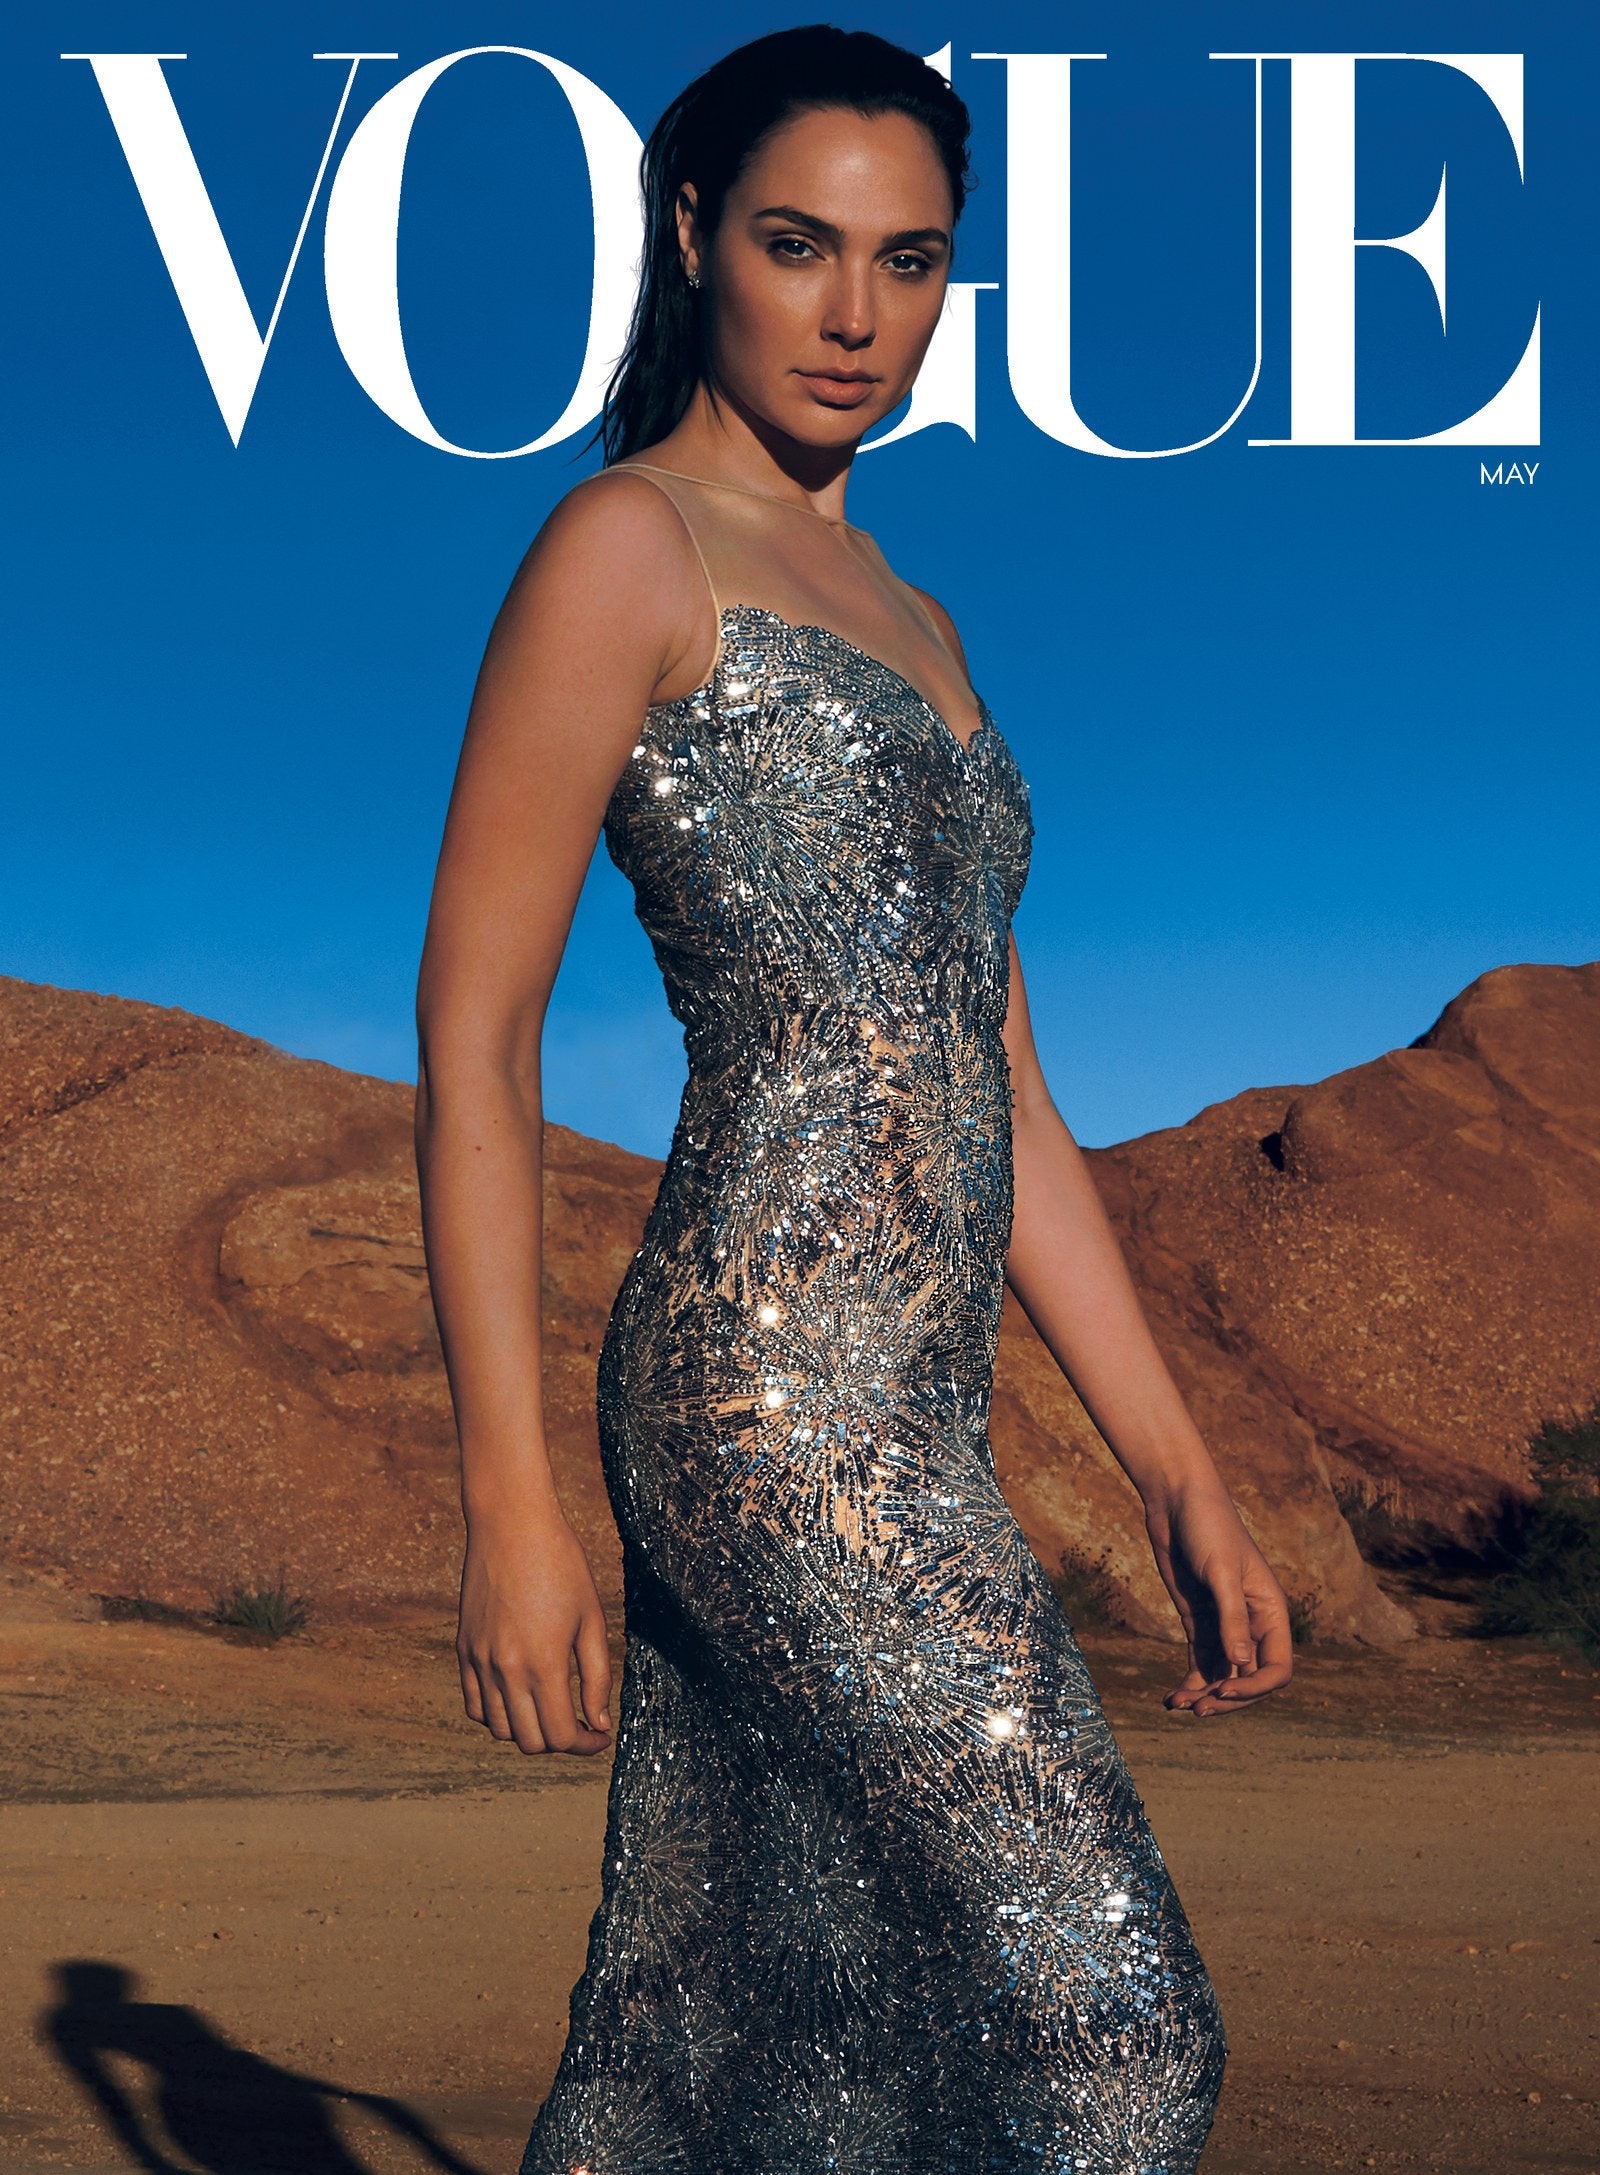 Photos n°6 : Gal Gadot for Vogue!